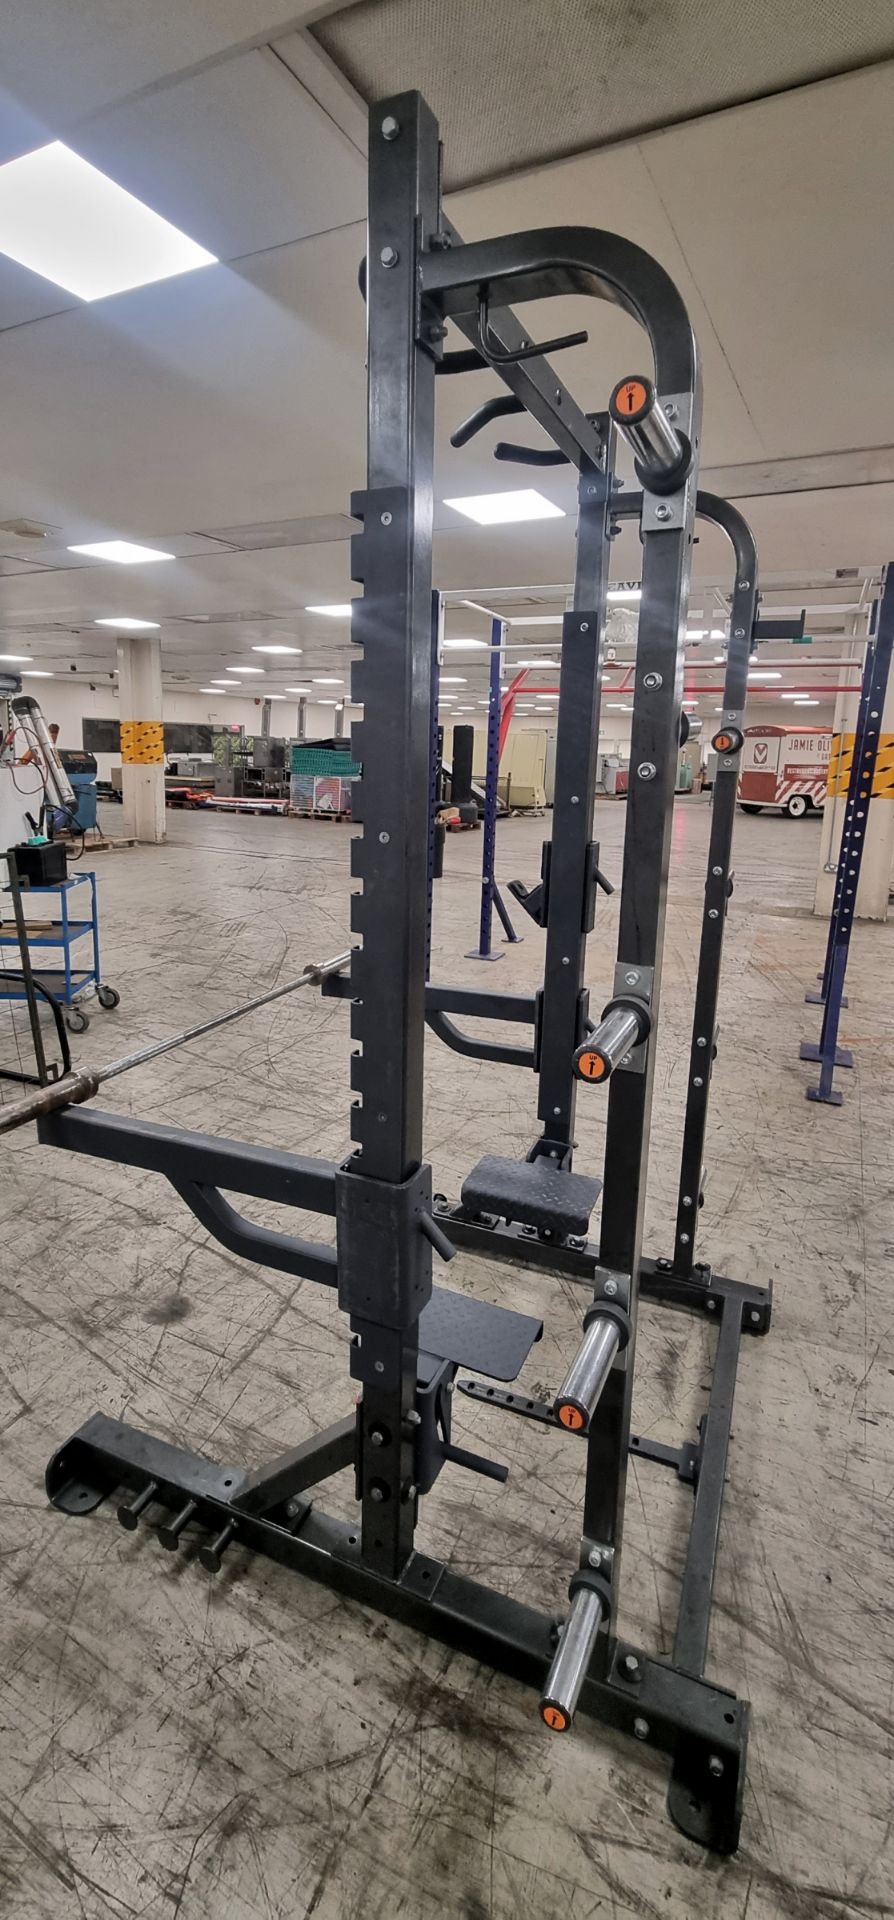 Spark multi-gym squat rack with power lift bar - 150 L x 170 W x 245 H cm - Image 4 of 7